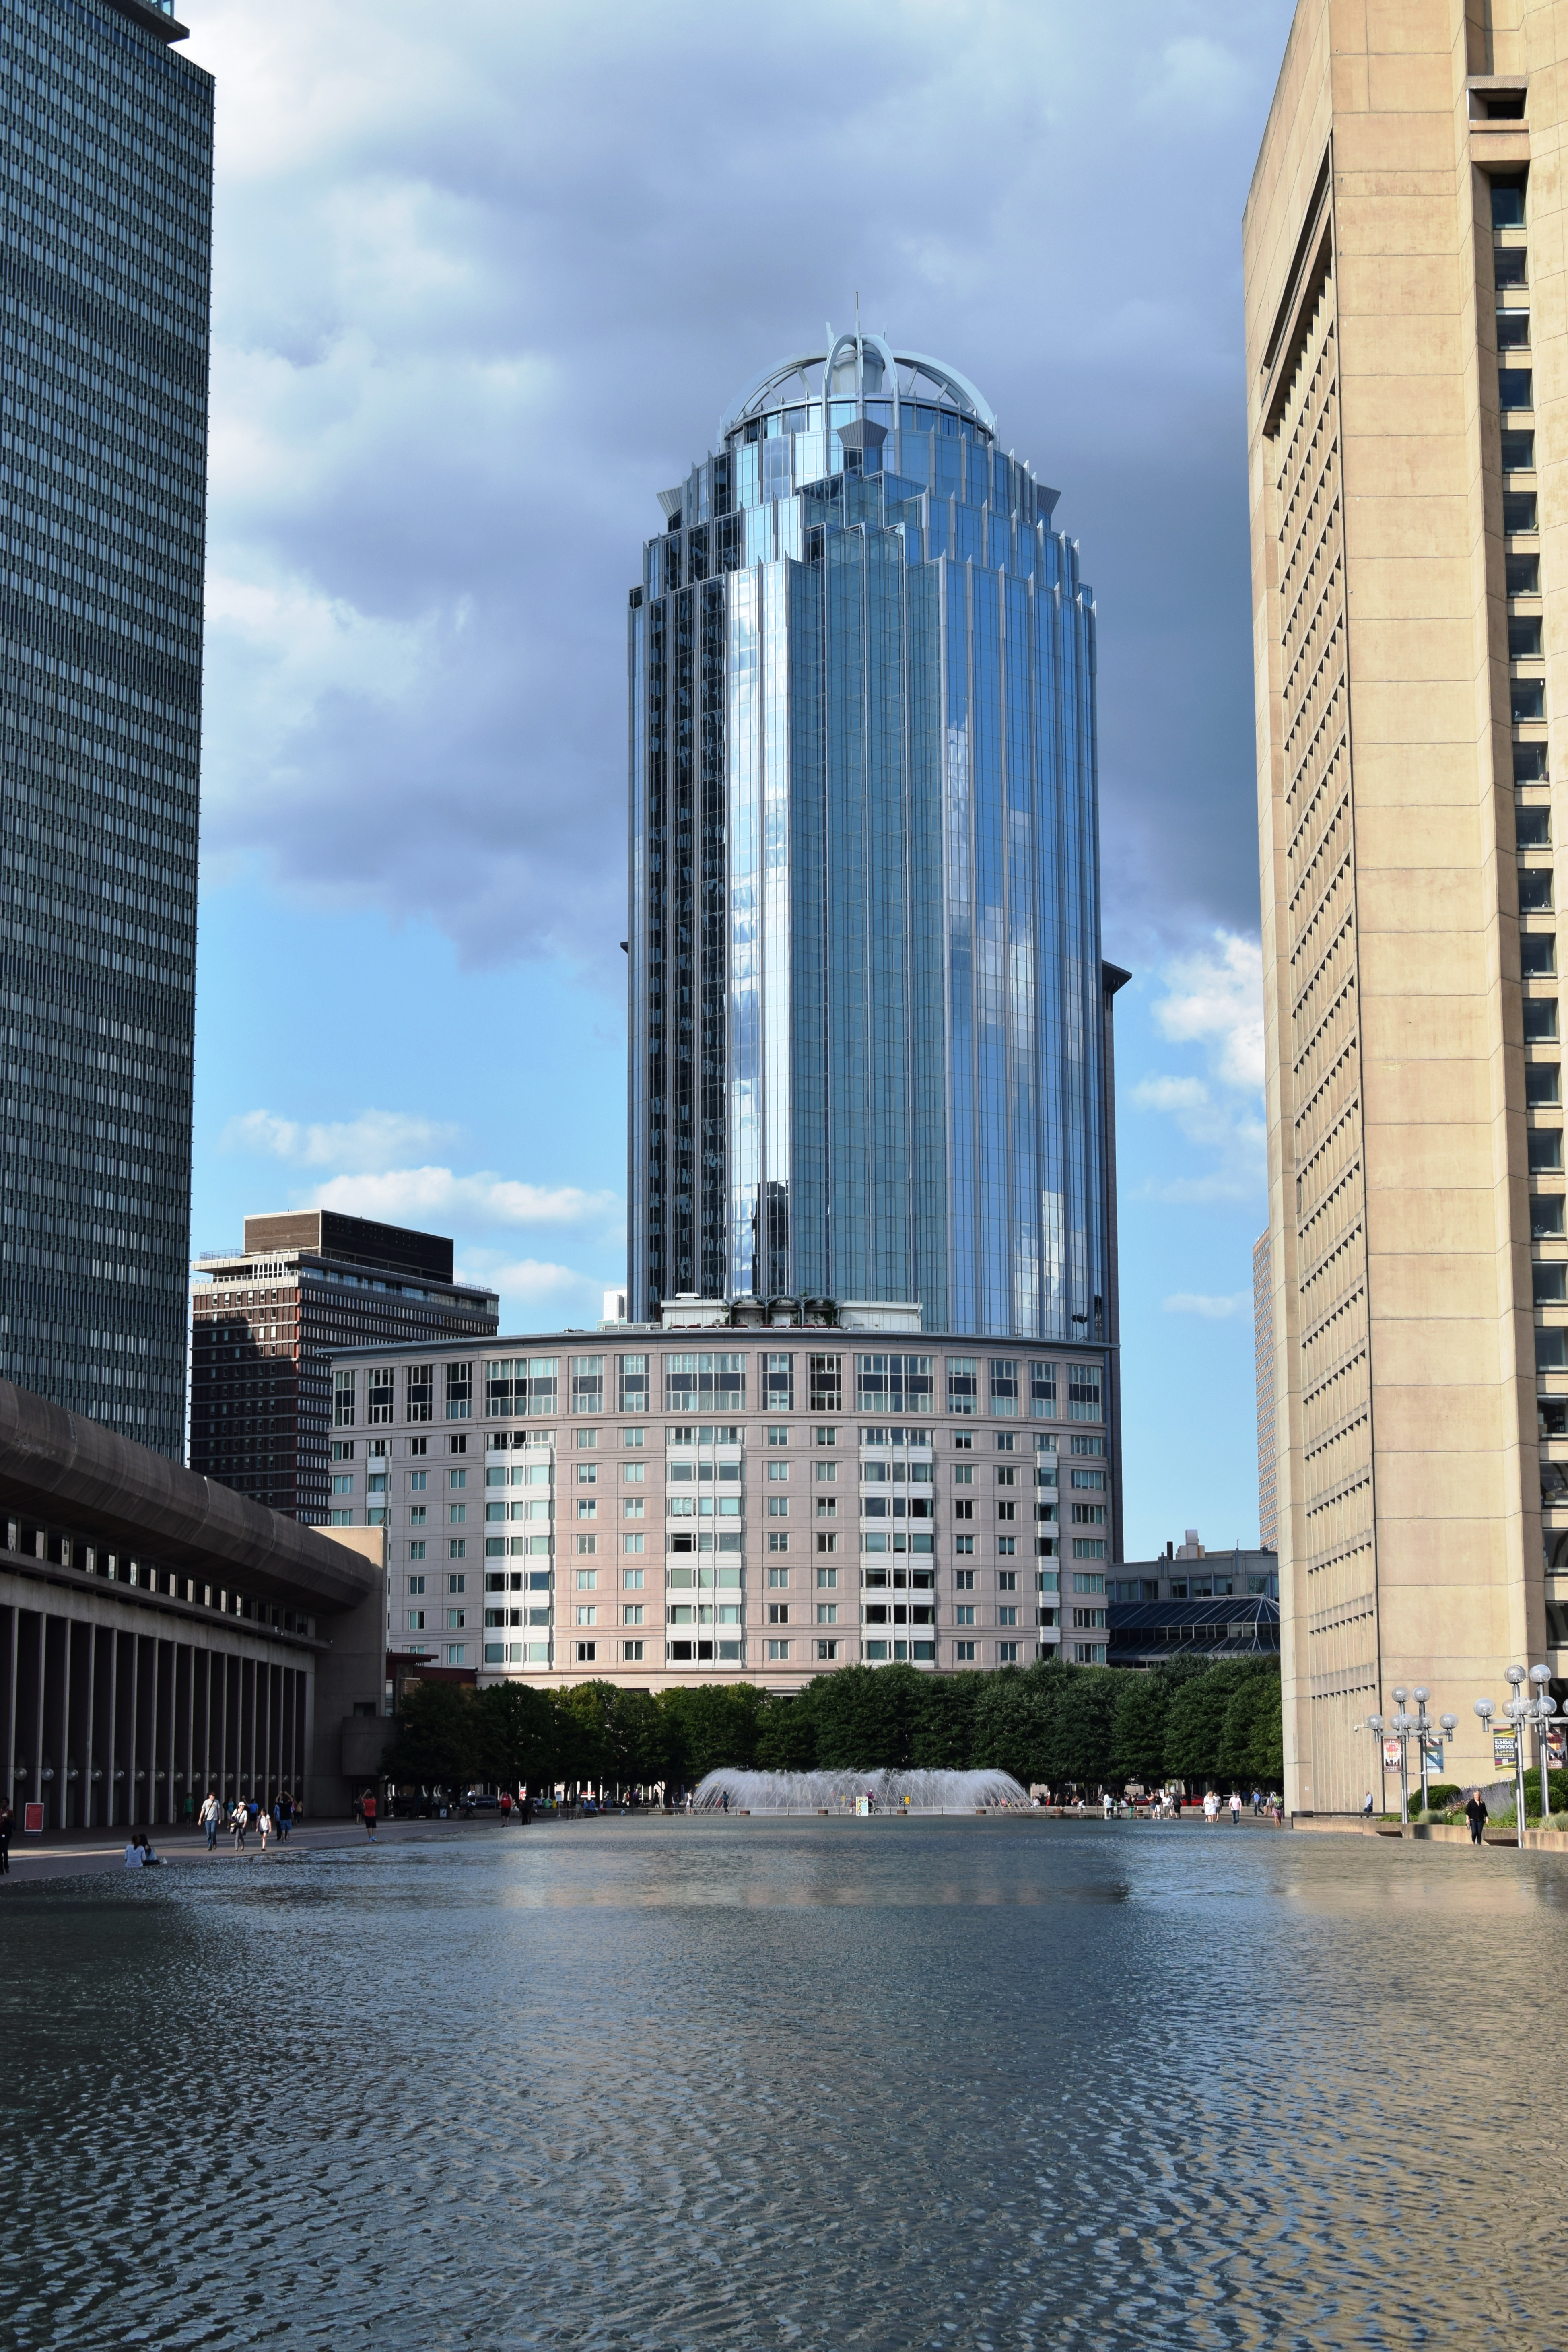 File:High-rise buildings in Boston.JPG - Wikimedia Commons